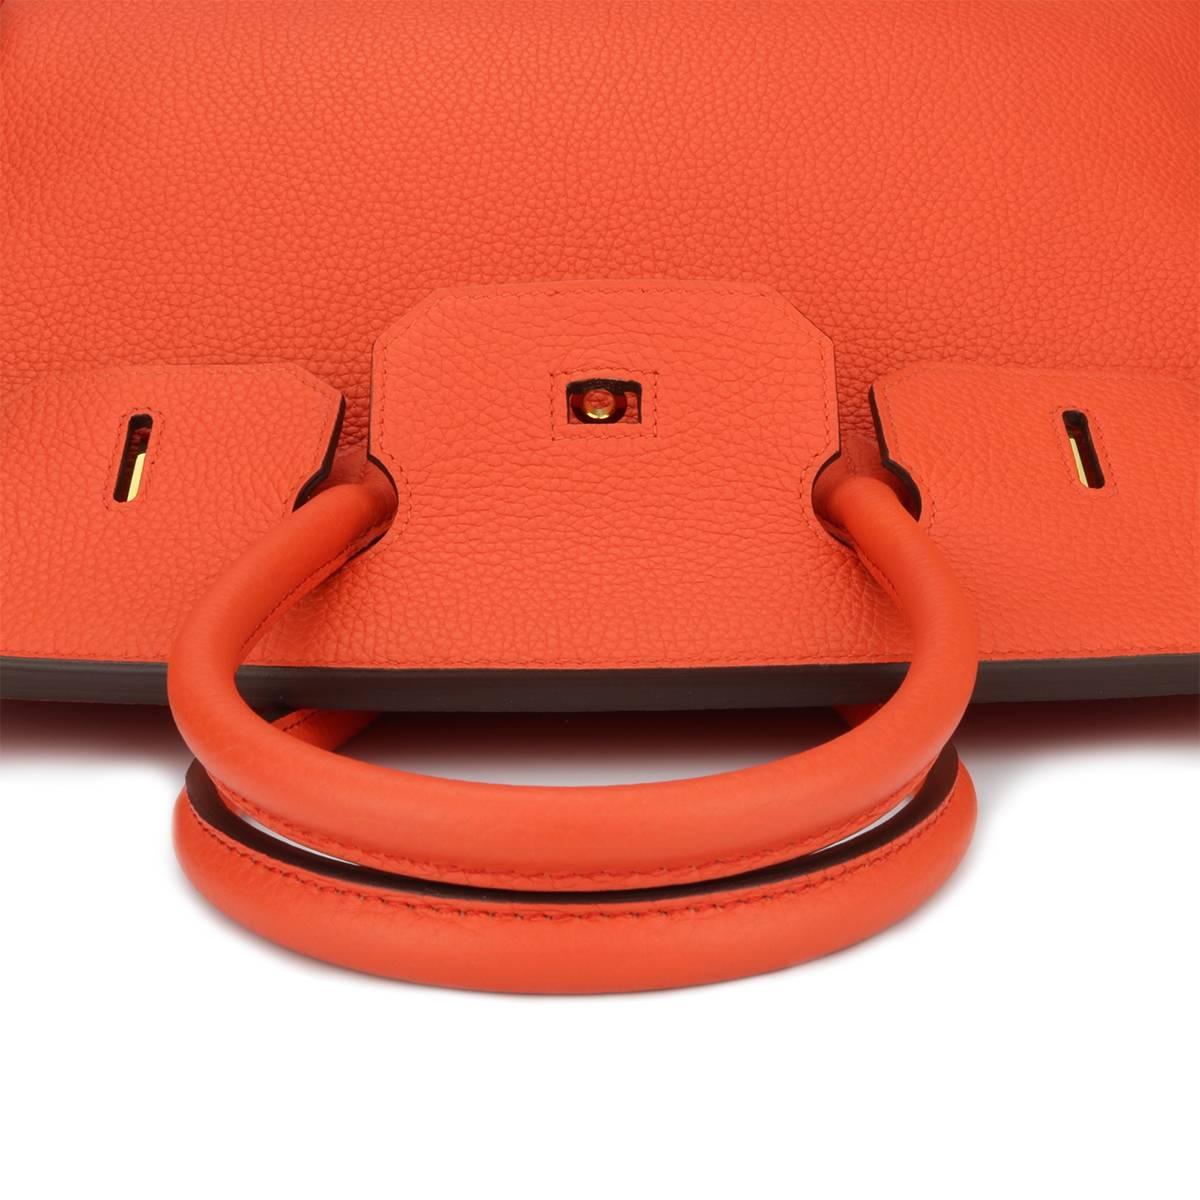 Hermès 35cm Orange Togo Leather with Gold Hardware Stamp T Year 2015 Birkin Bag 6